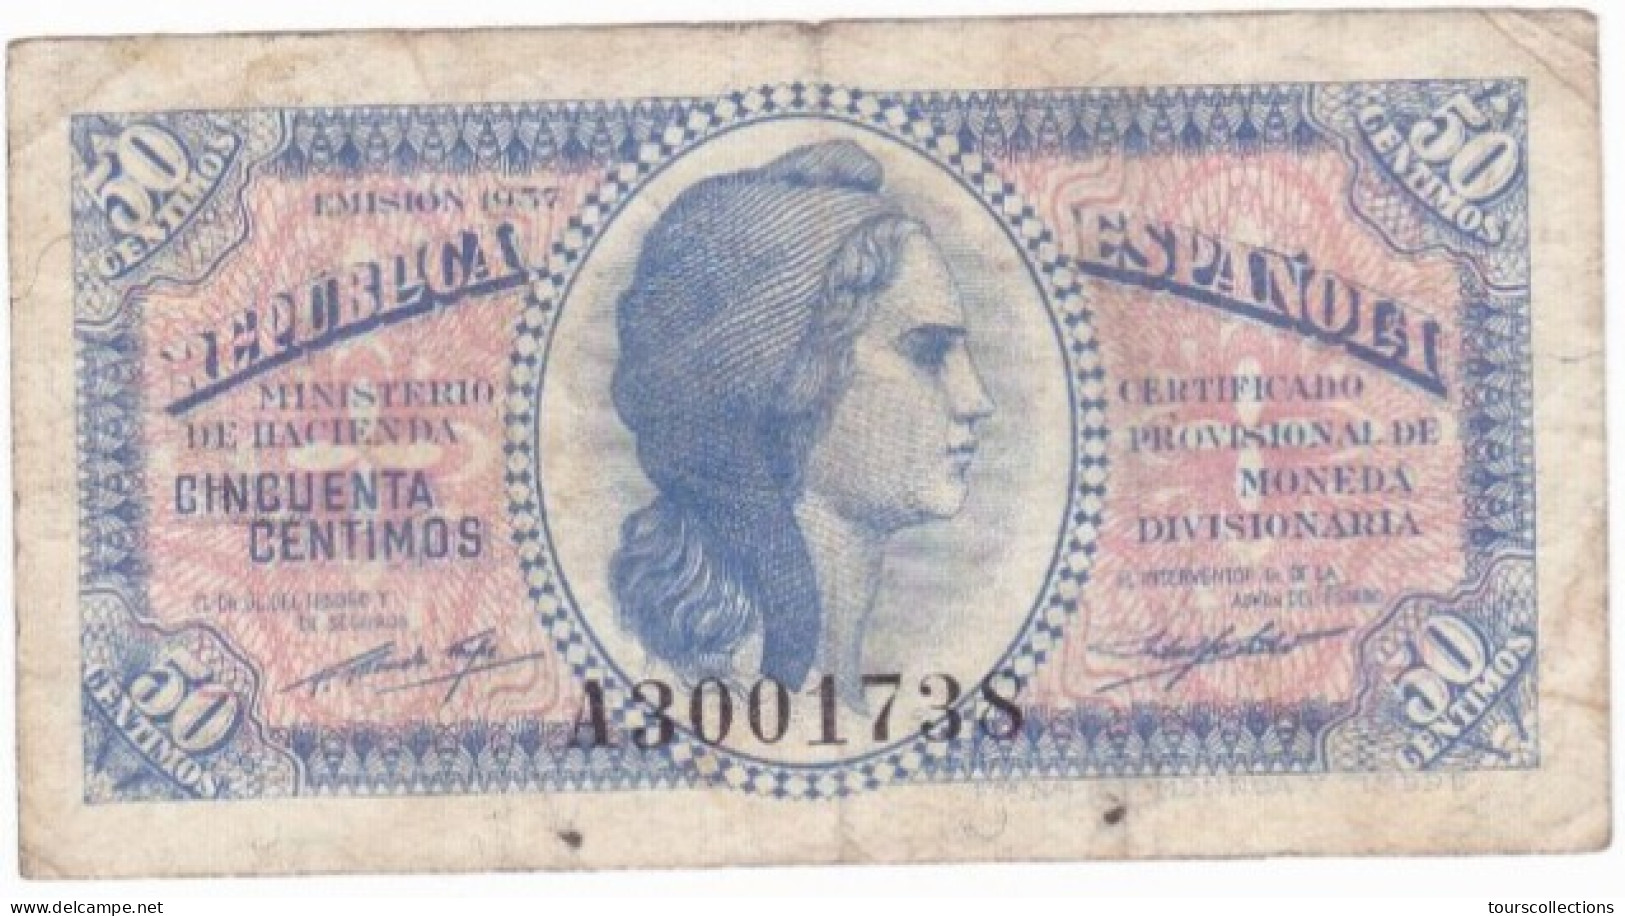 ESPAGNE - ESPAÑA - BILLET 50 Centimos GUERRE CIVILE FRANCO 1937 - Série A 3001738 - 1-2 Pesetas